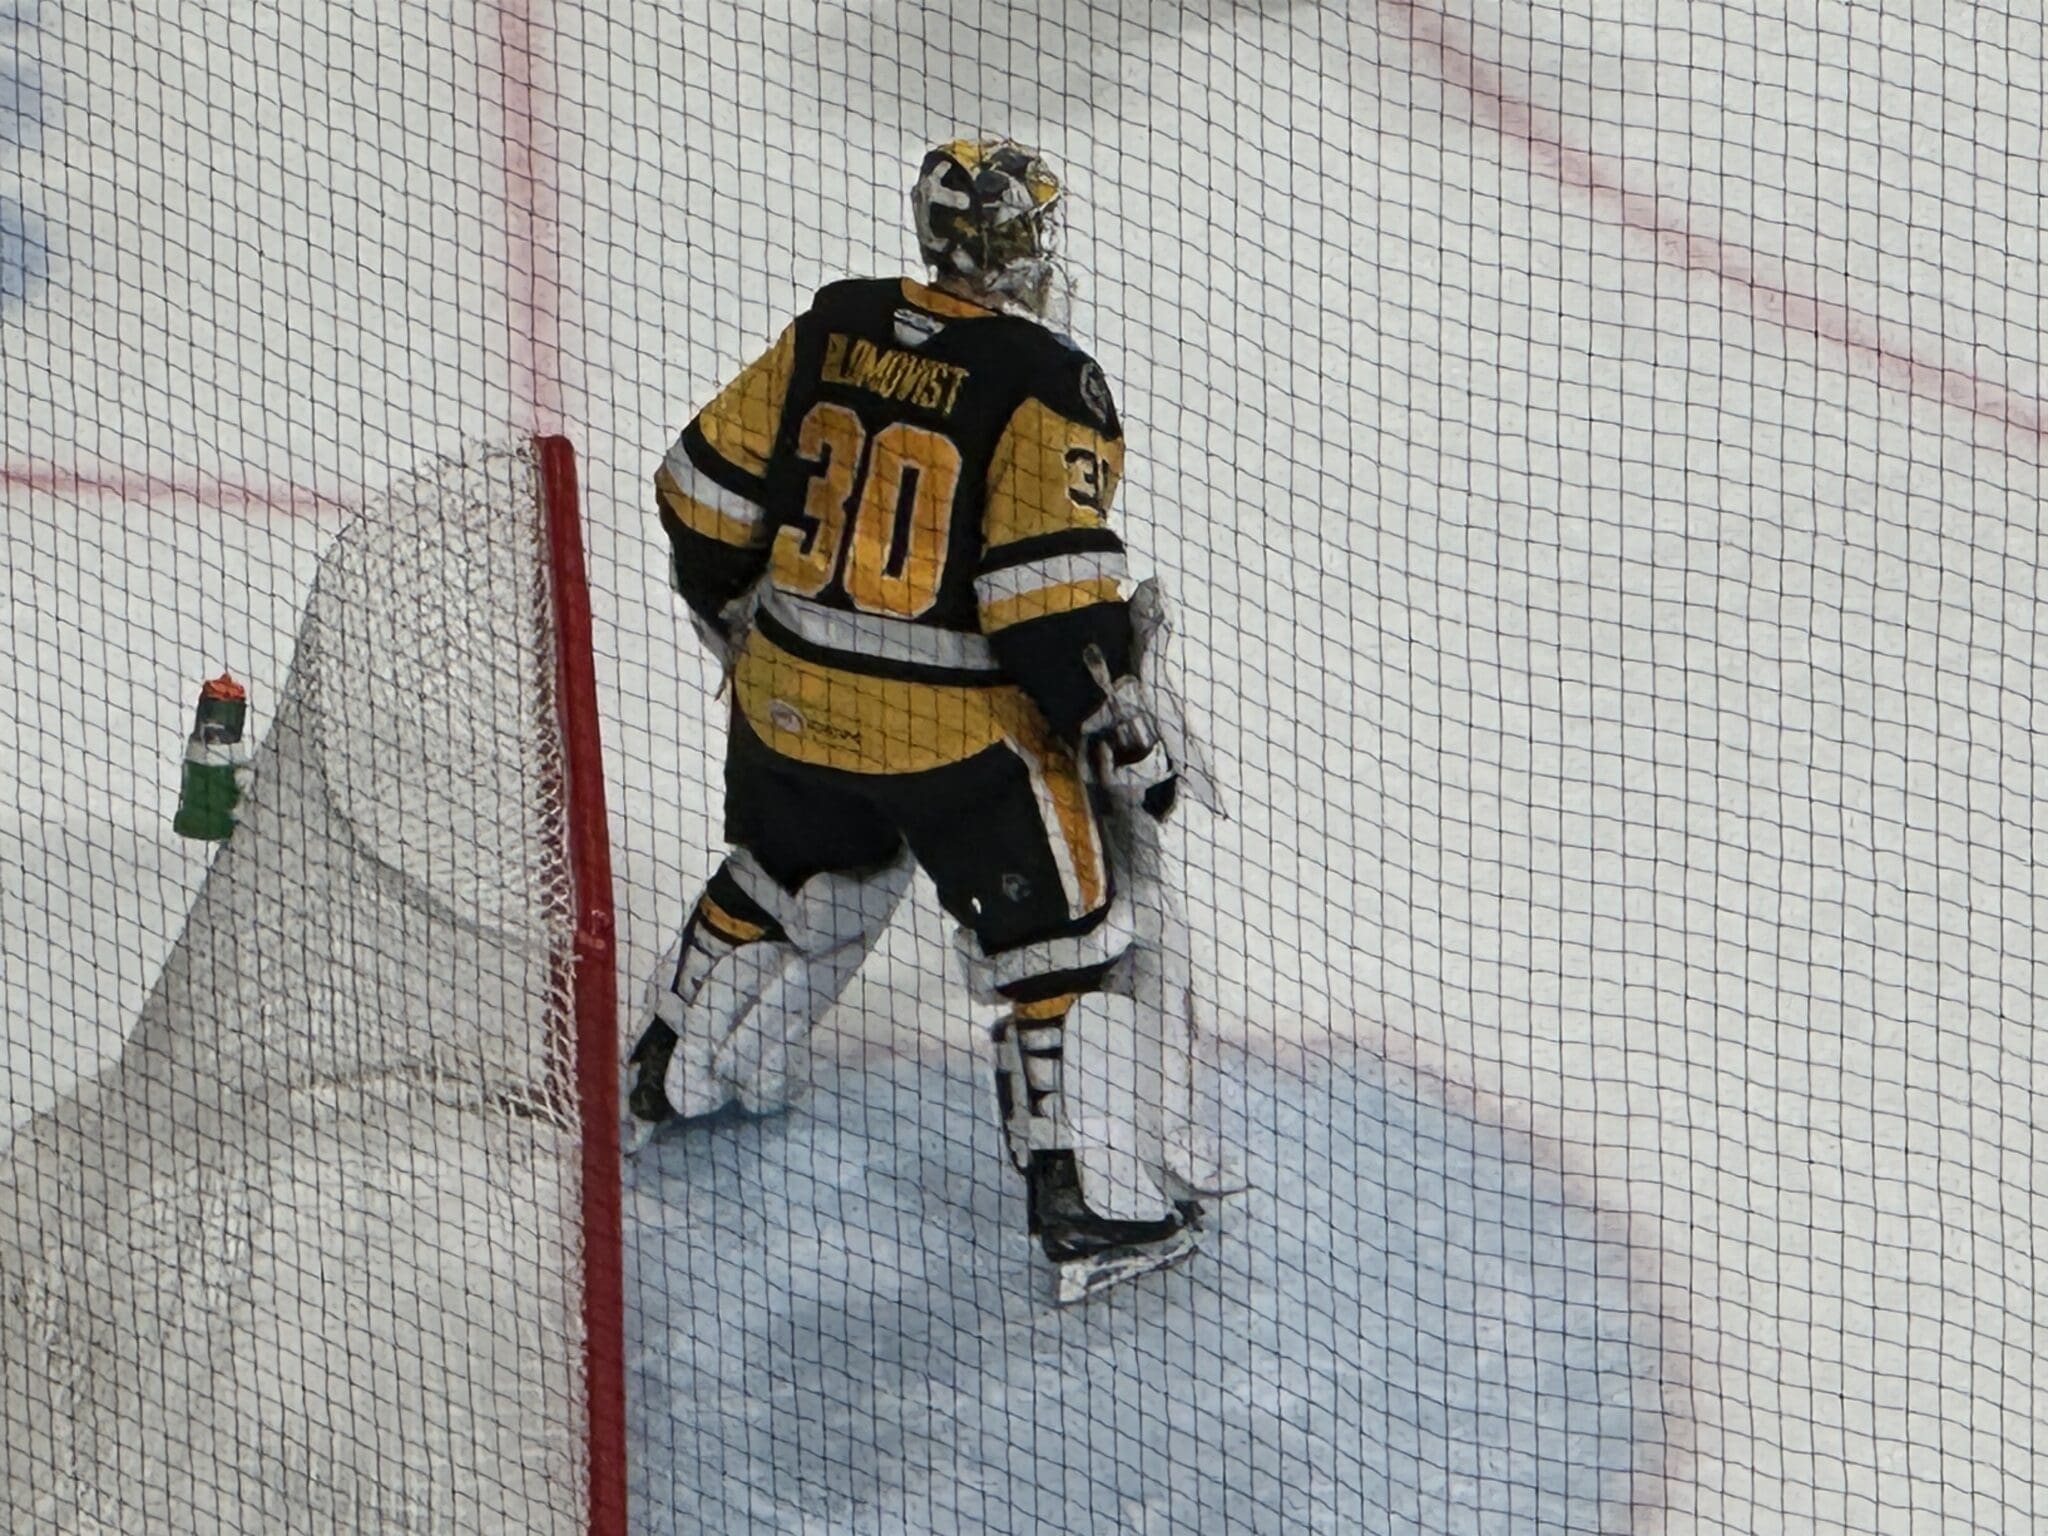 Pittsburgh Penguins prospects, Joel Blomqvist